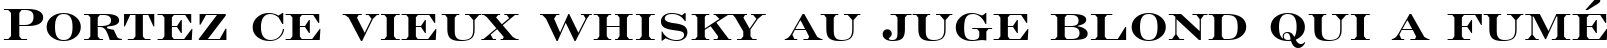 Пример написания шрифтом Engravers' Roman Bold BT текста на французском